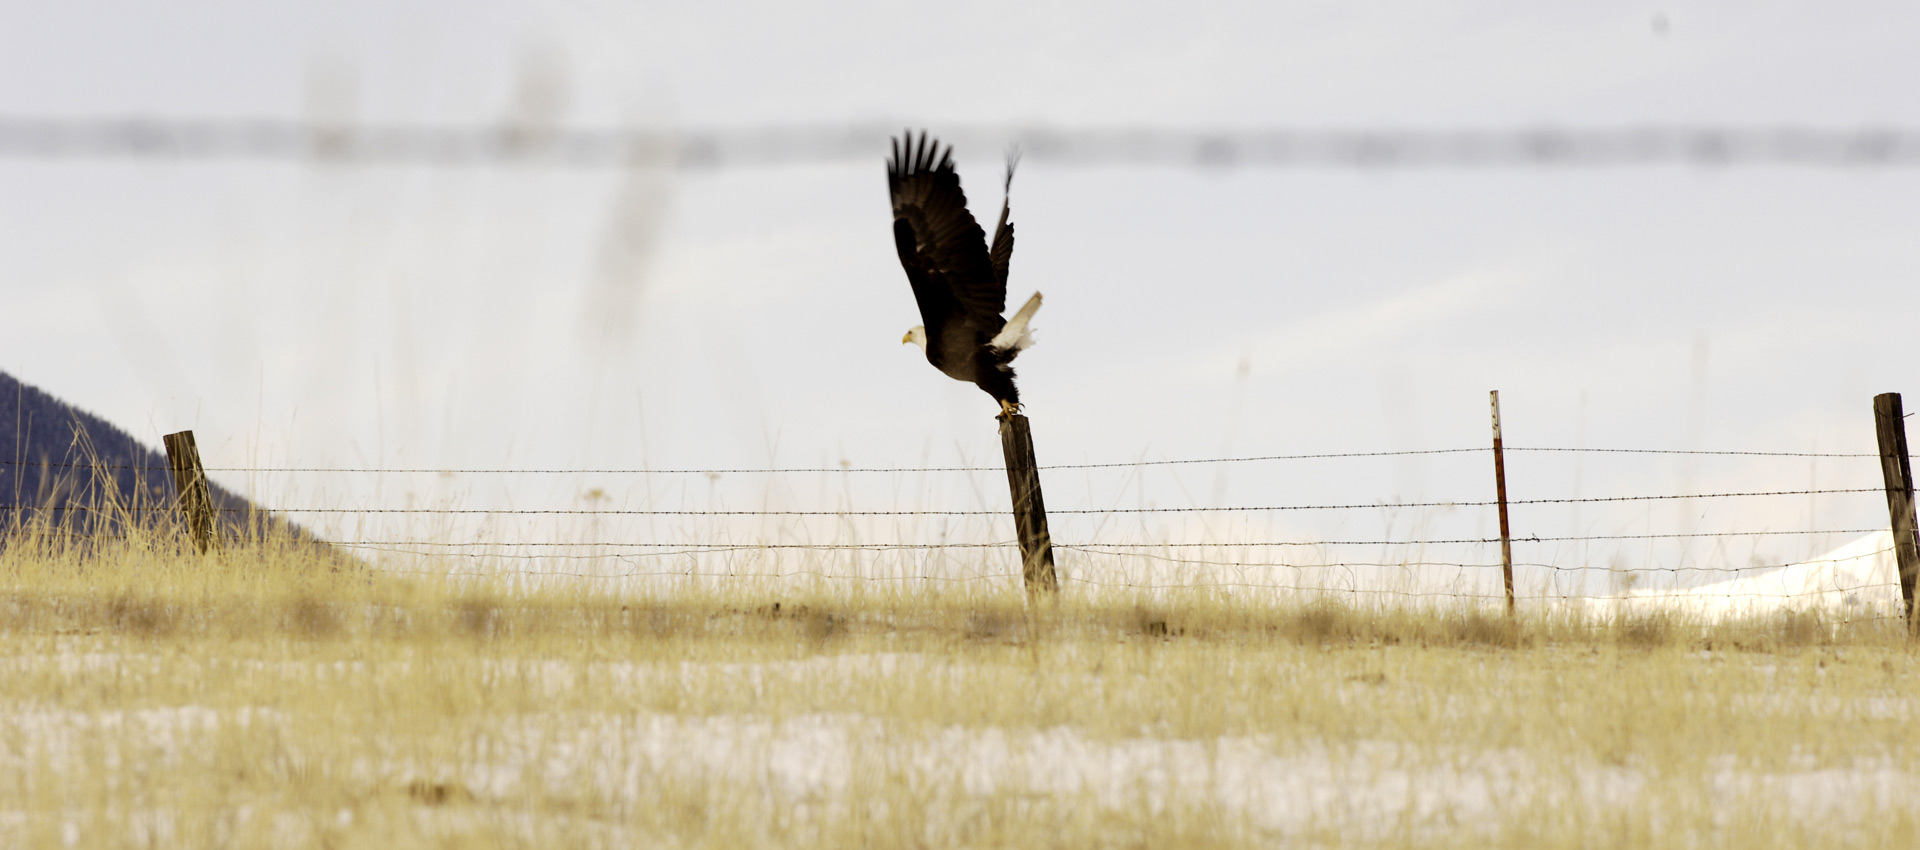 American Bald Eagle starting flight near a fence